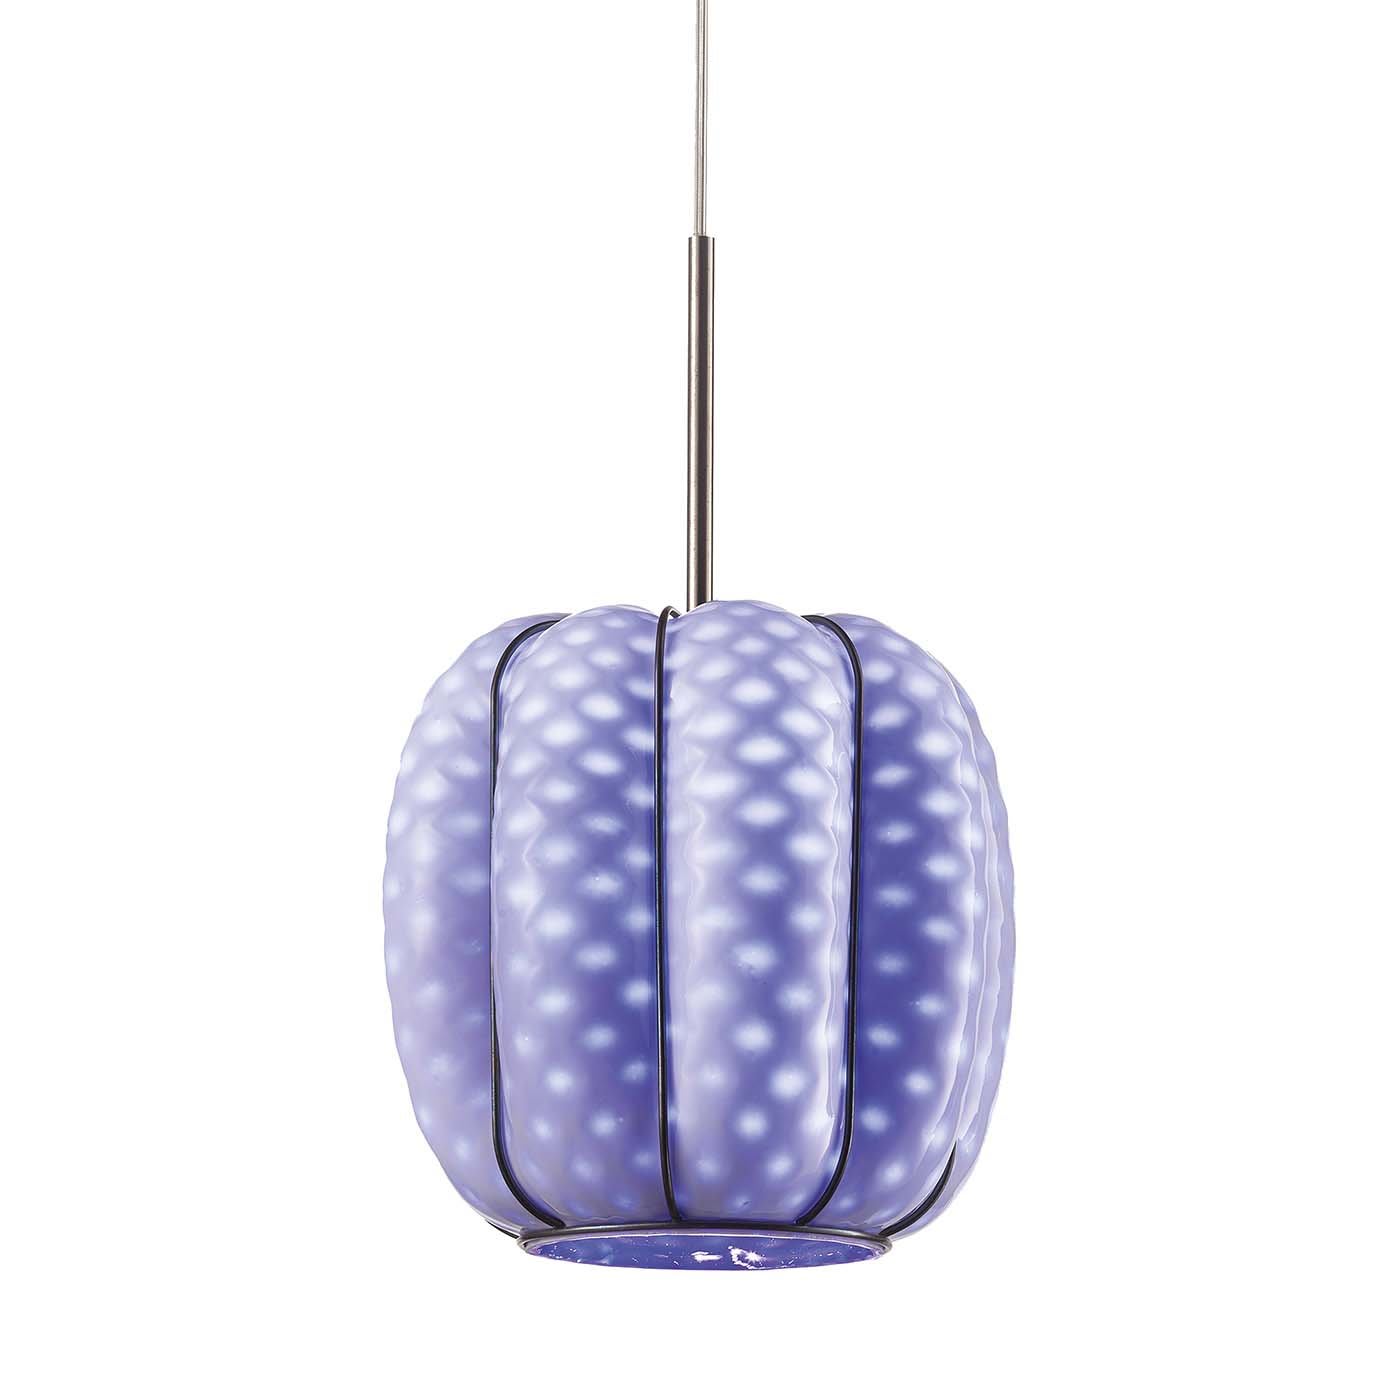 Nest blue glass pendant light - Siru Illuminazione